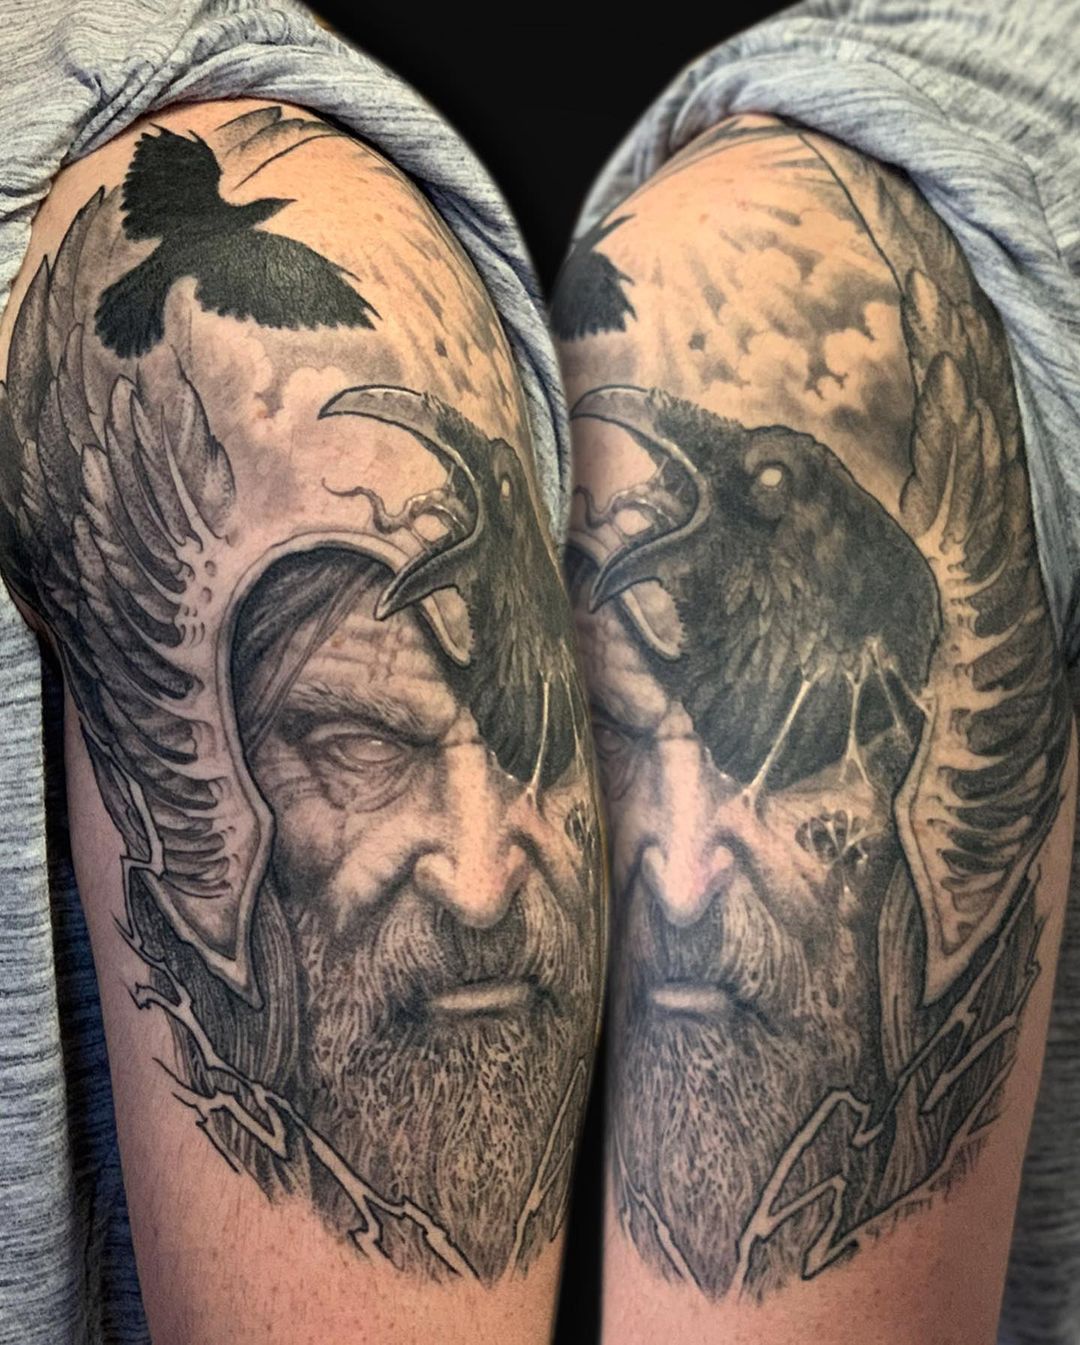 A big Odin tattoo is a great mythological piece.